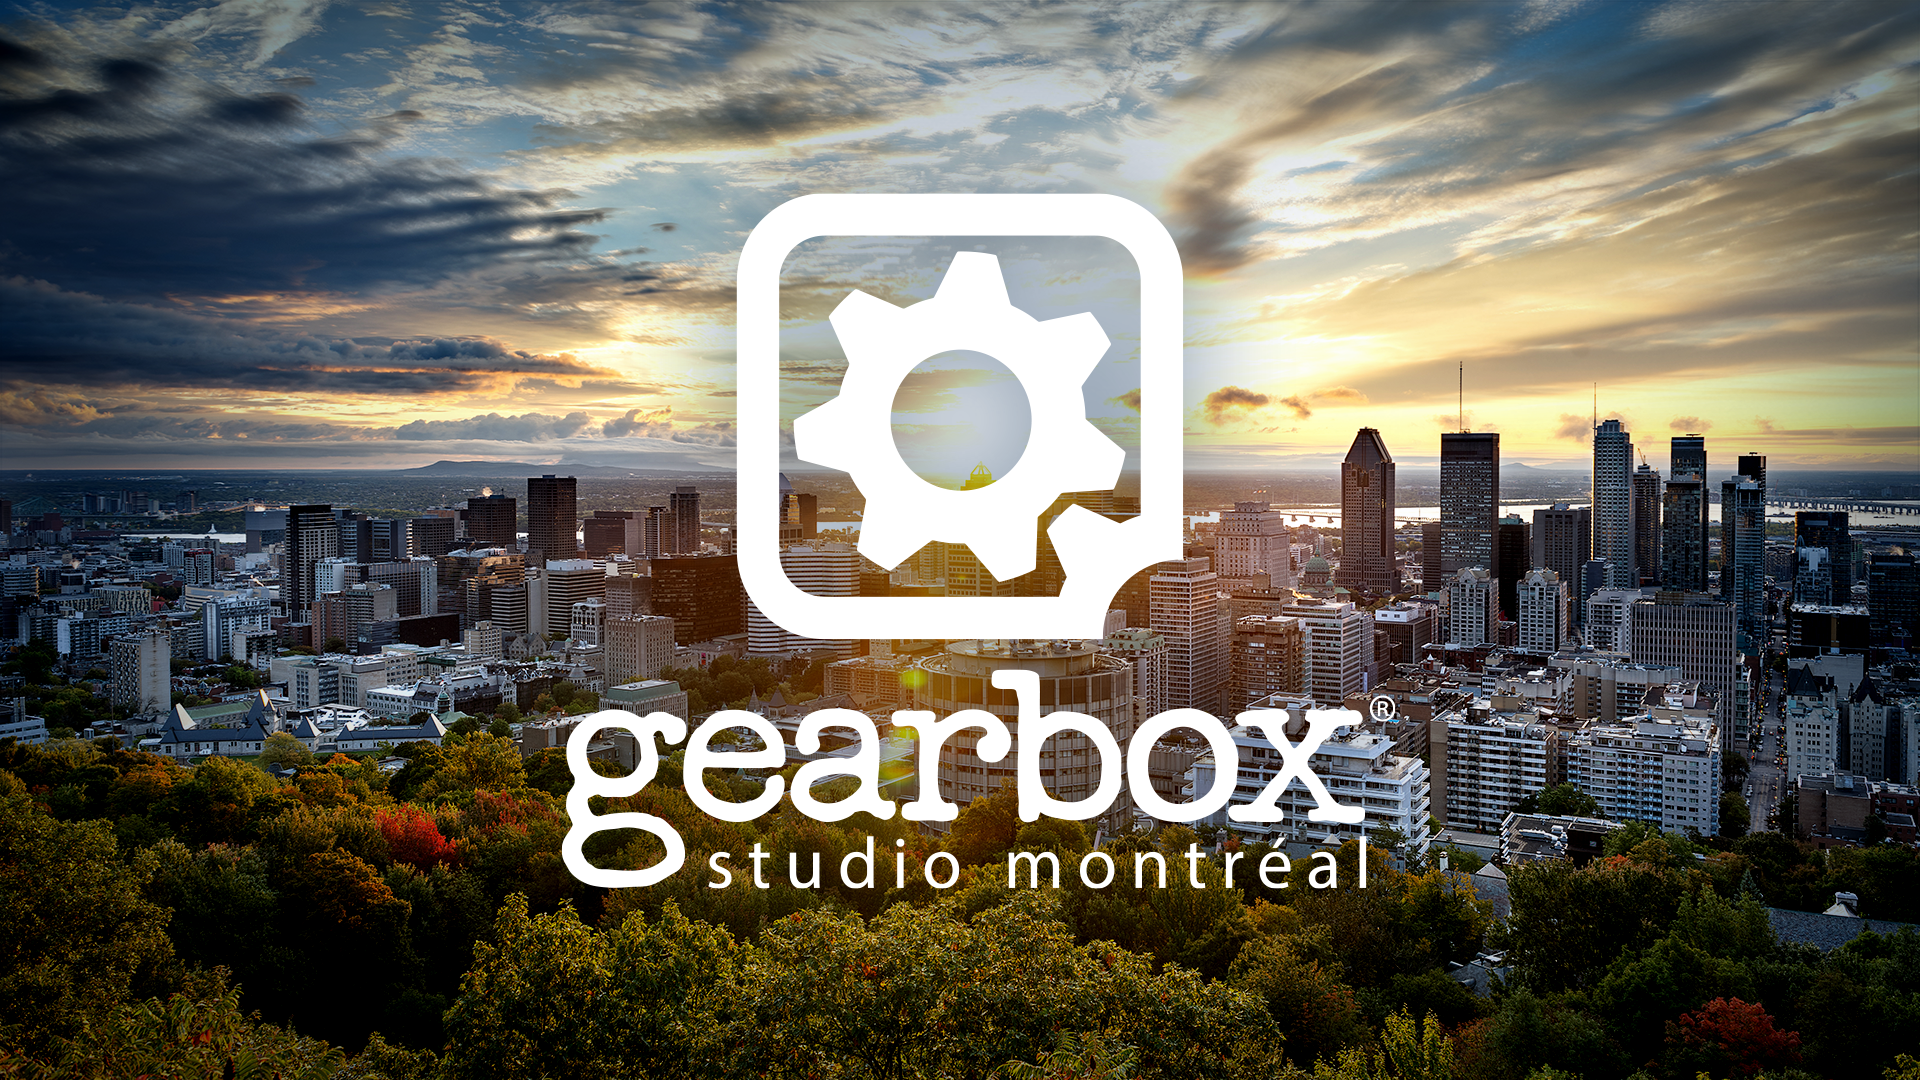 Gearbox Studio Montréal